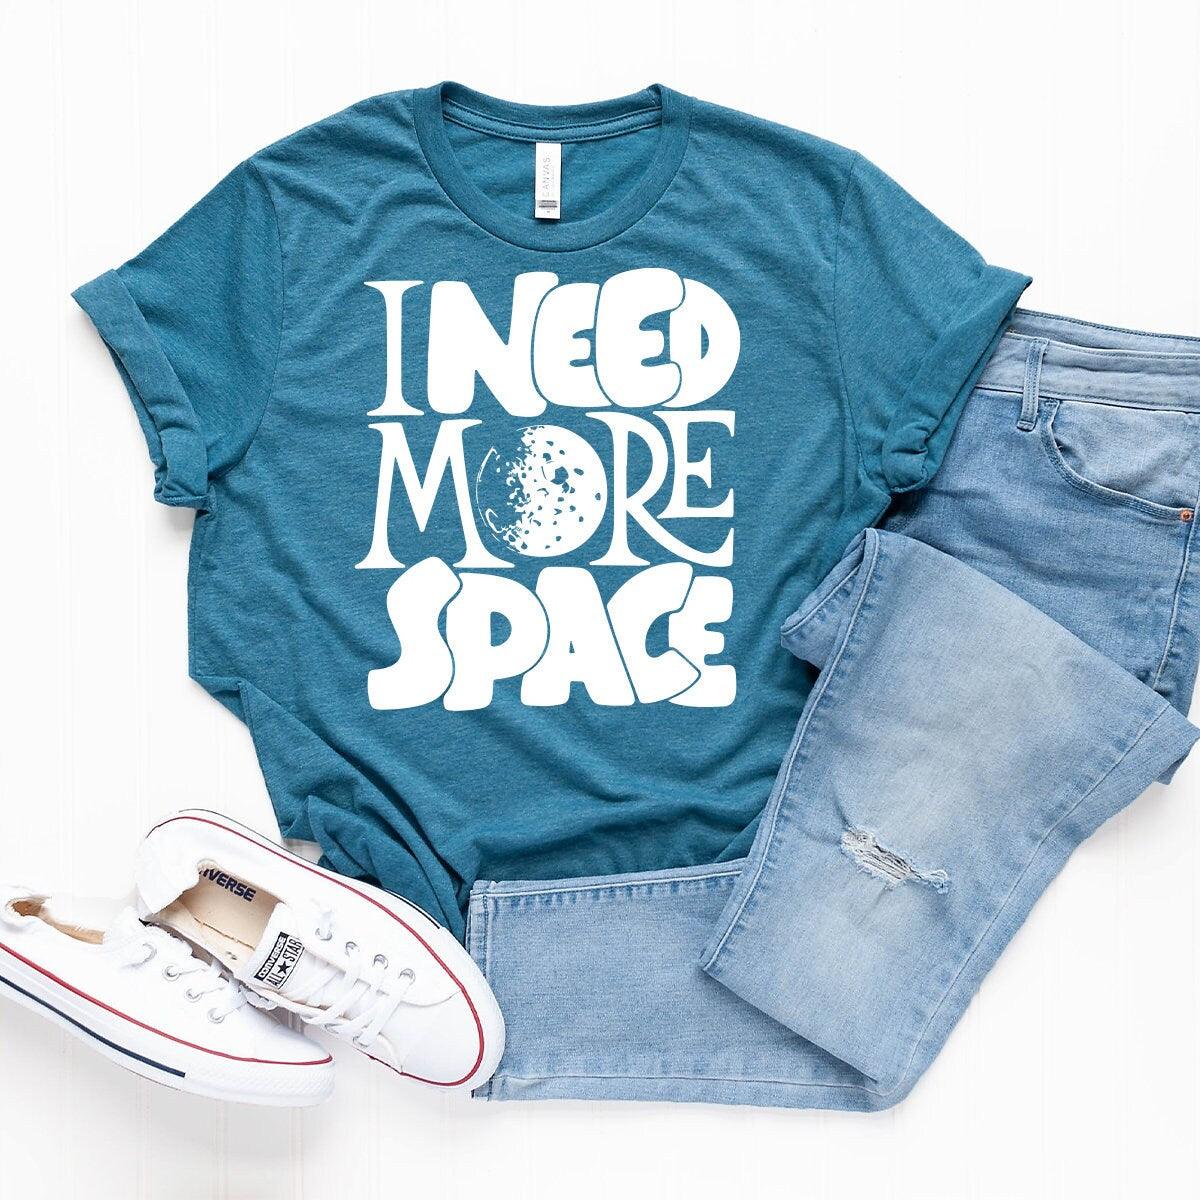 Astronauts Shirt, Funny Shirt, I Need More Space Shirt, Space Geek Gift, Space Theme Shirt, Humorous T Shirt, Funny T-Shirt - Fastdeliverytees.com